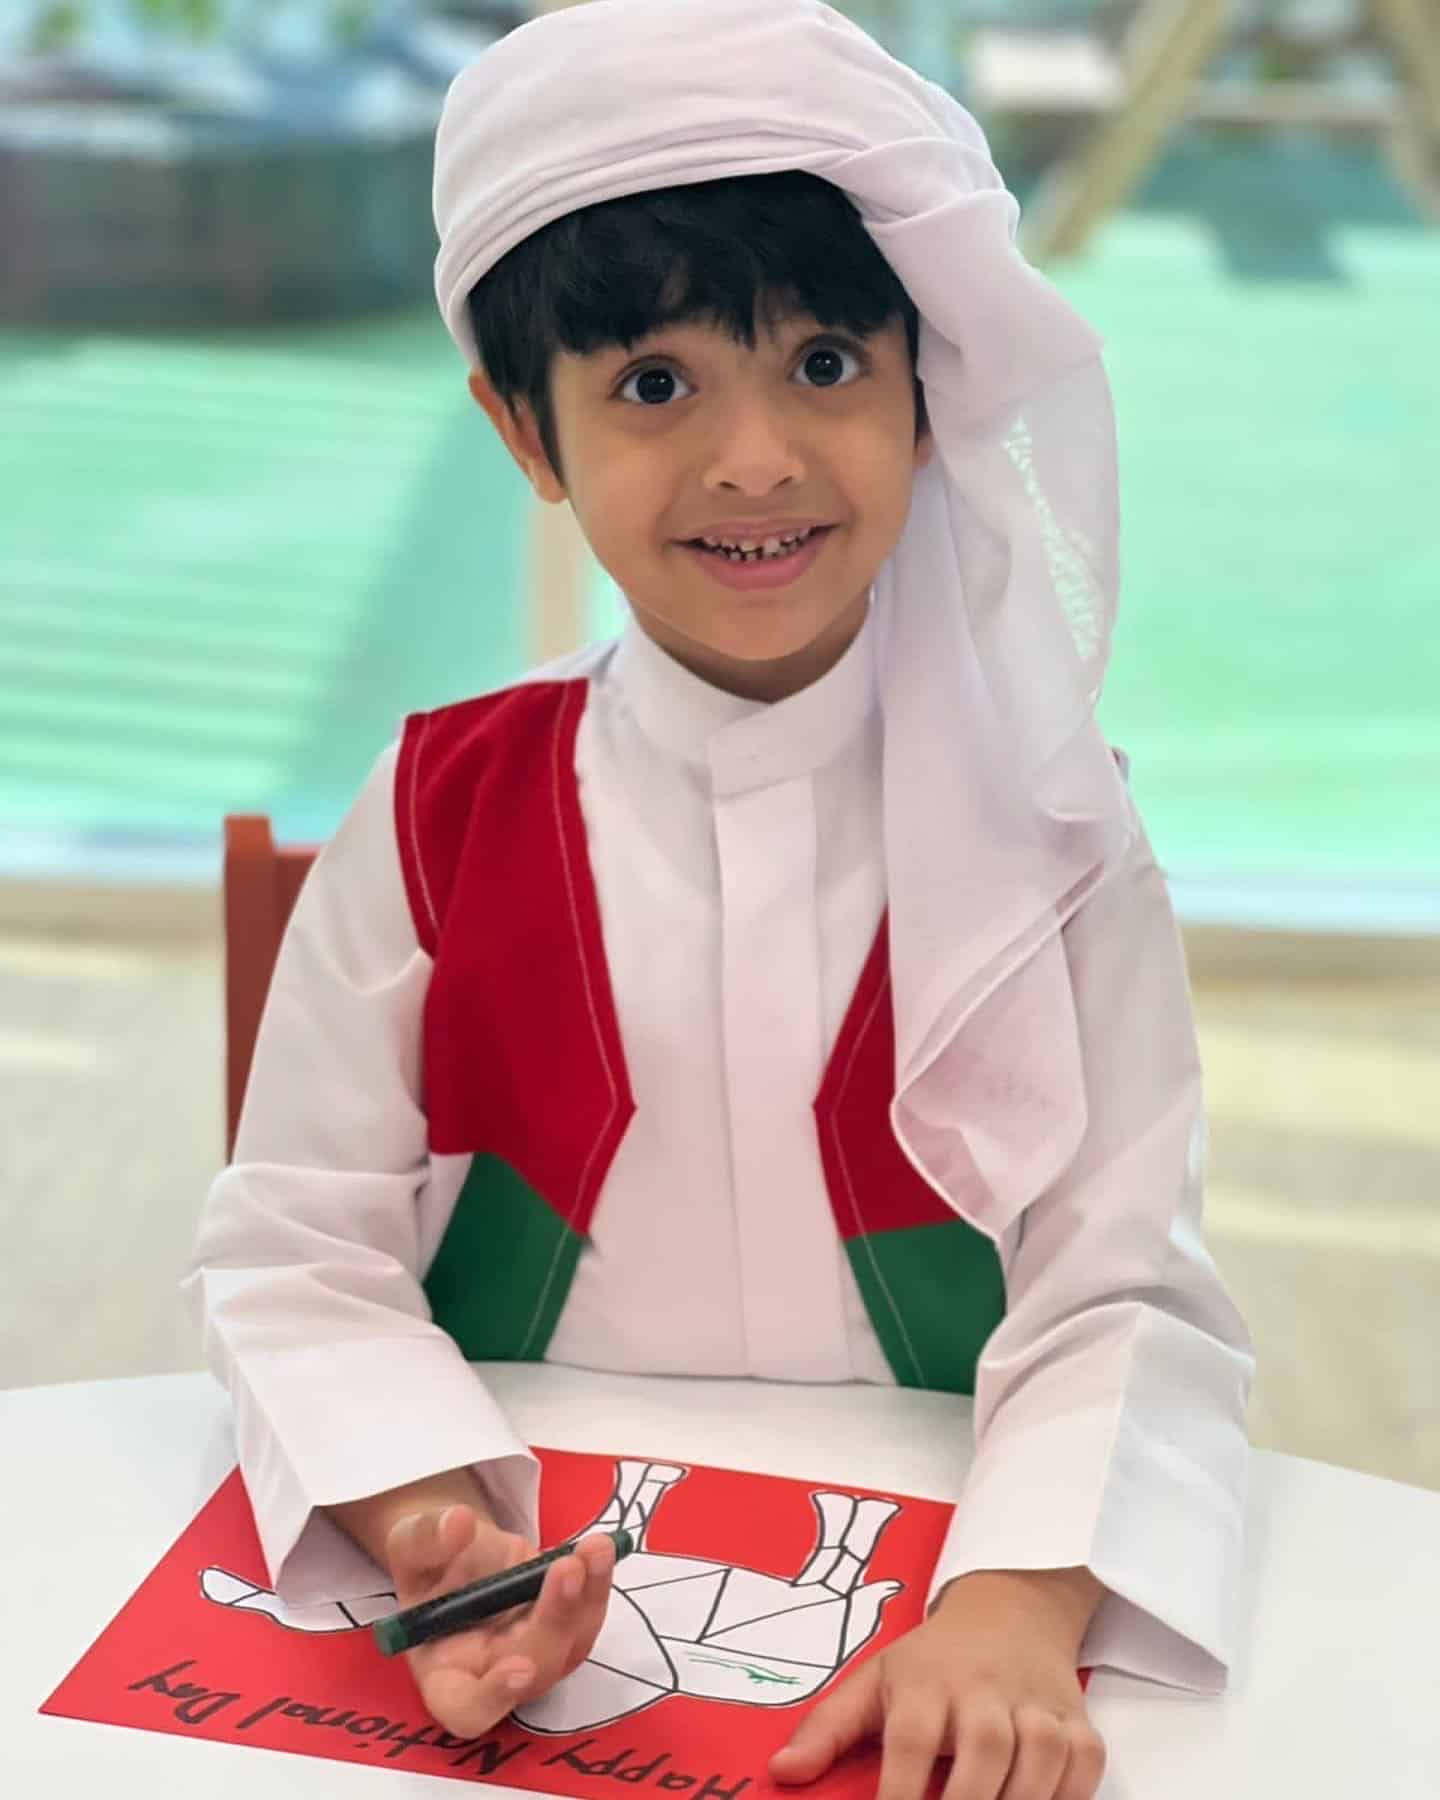 51st UAE National Day Celebrations at Westfield Nursery, Near The City Walk, Al Wasl, Dubai.